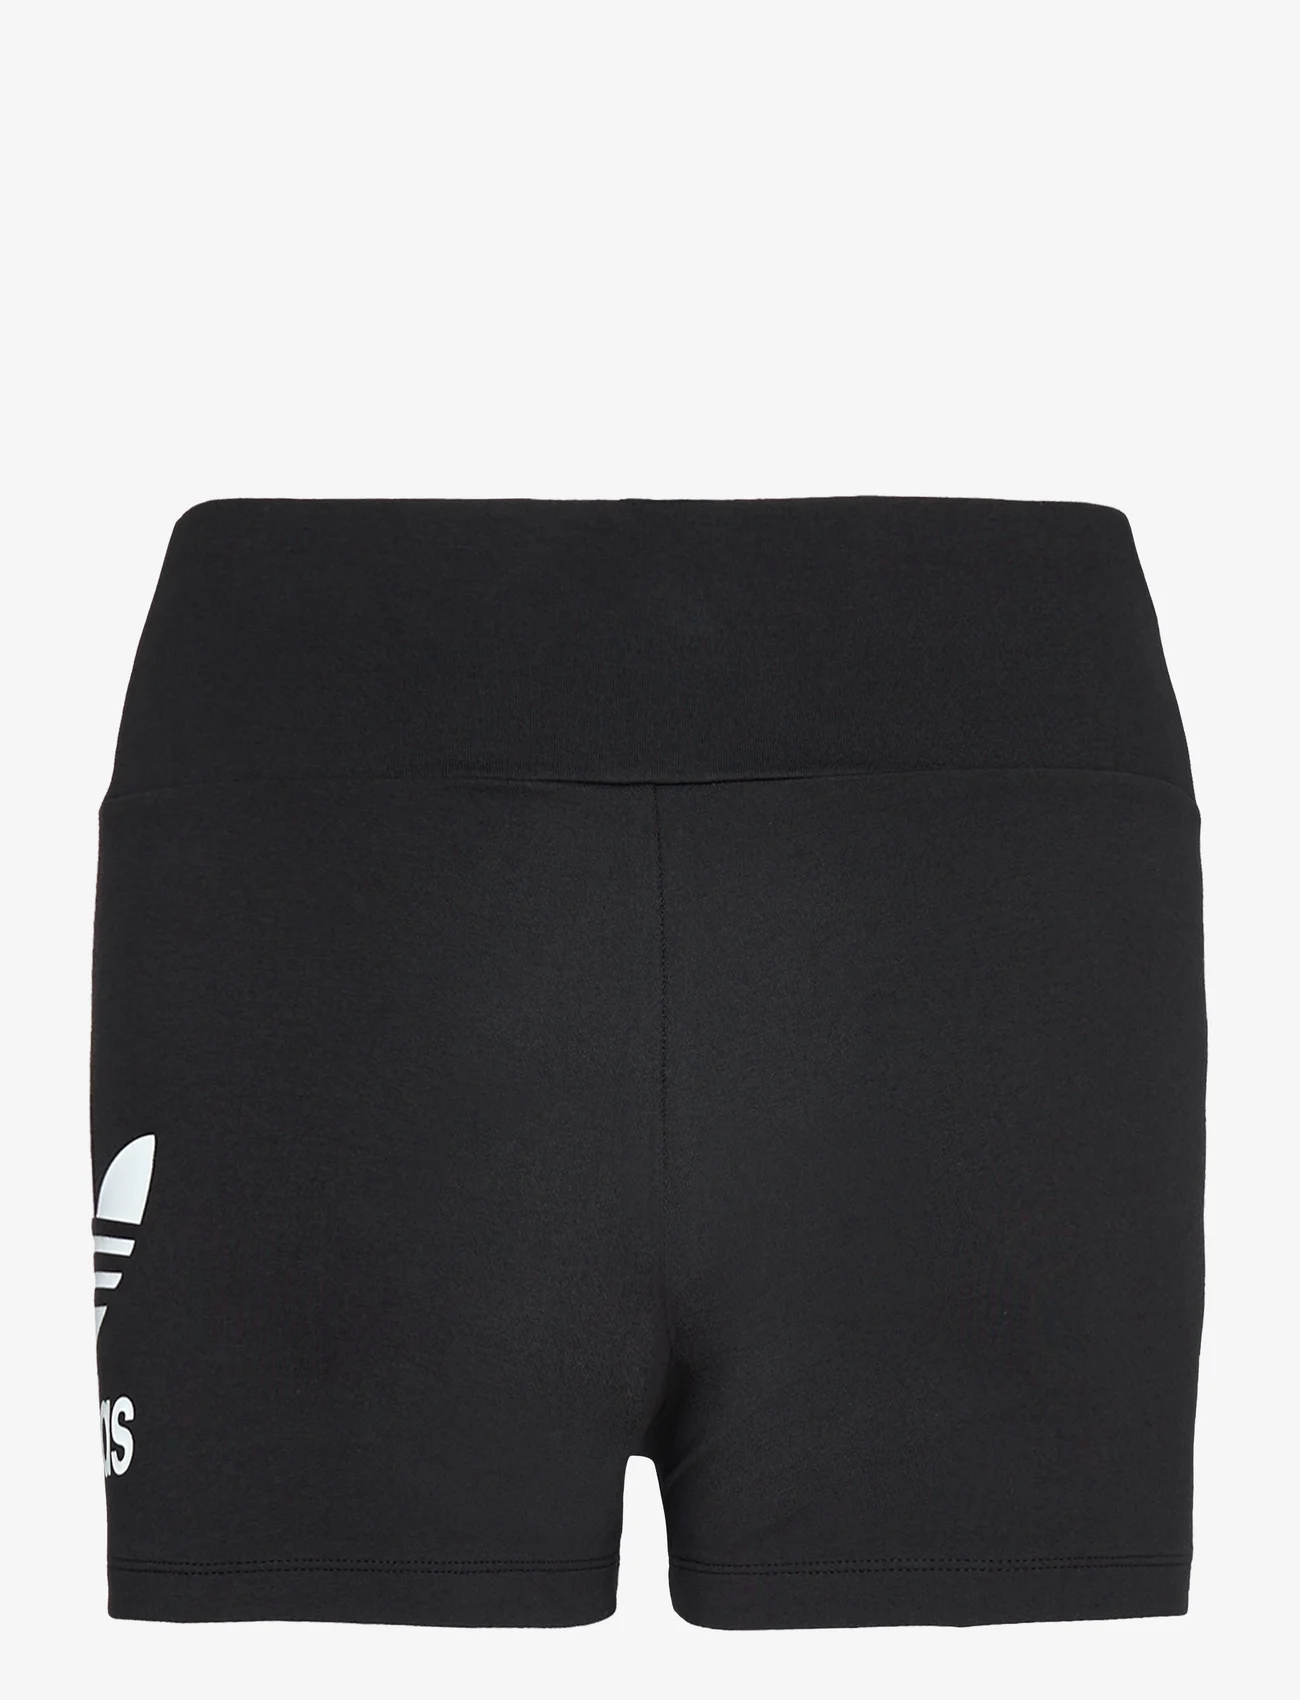 adidas Originals - TRF LGNS 1/4 - training shorts - black - 1